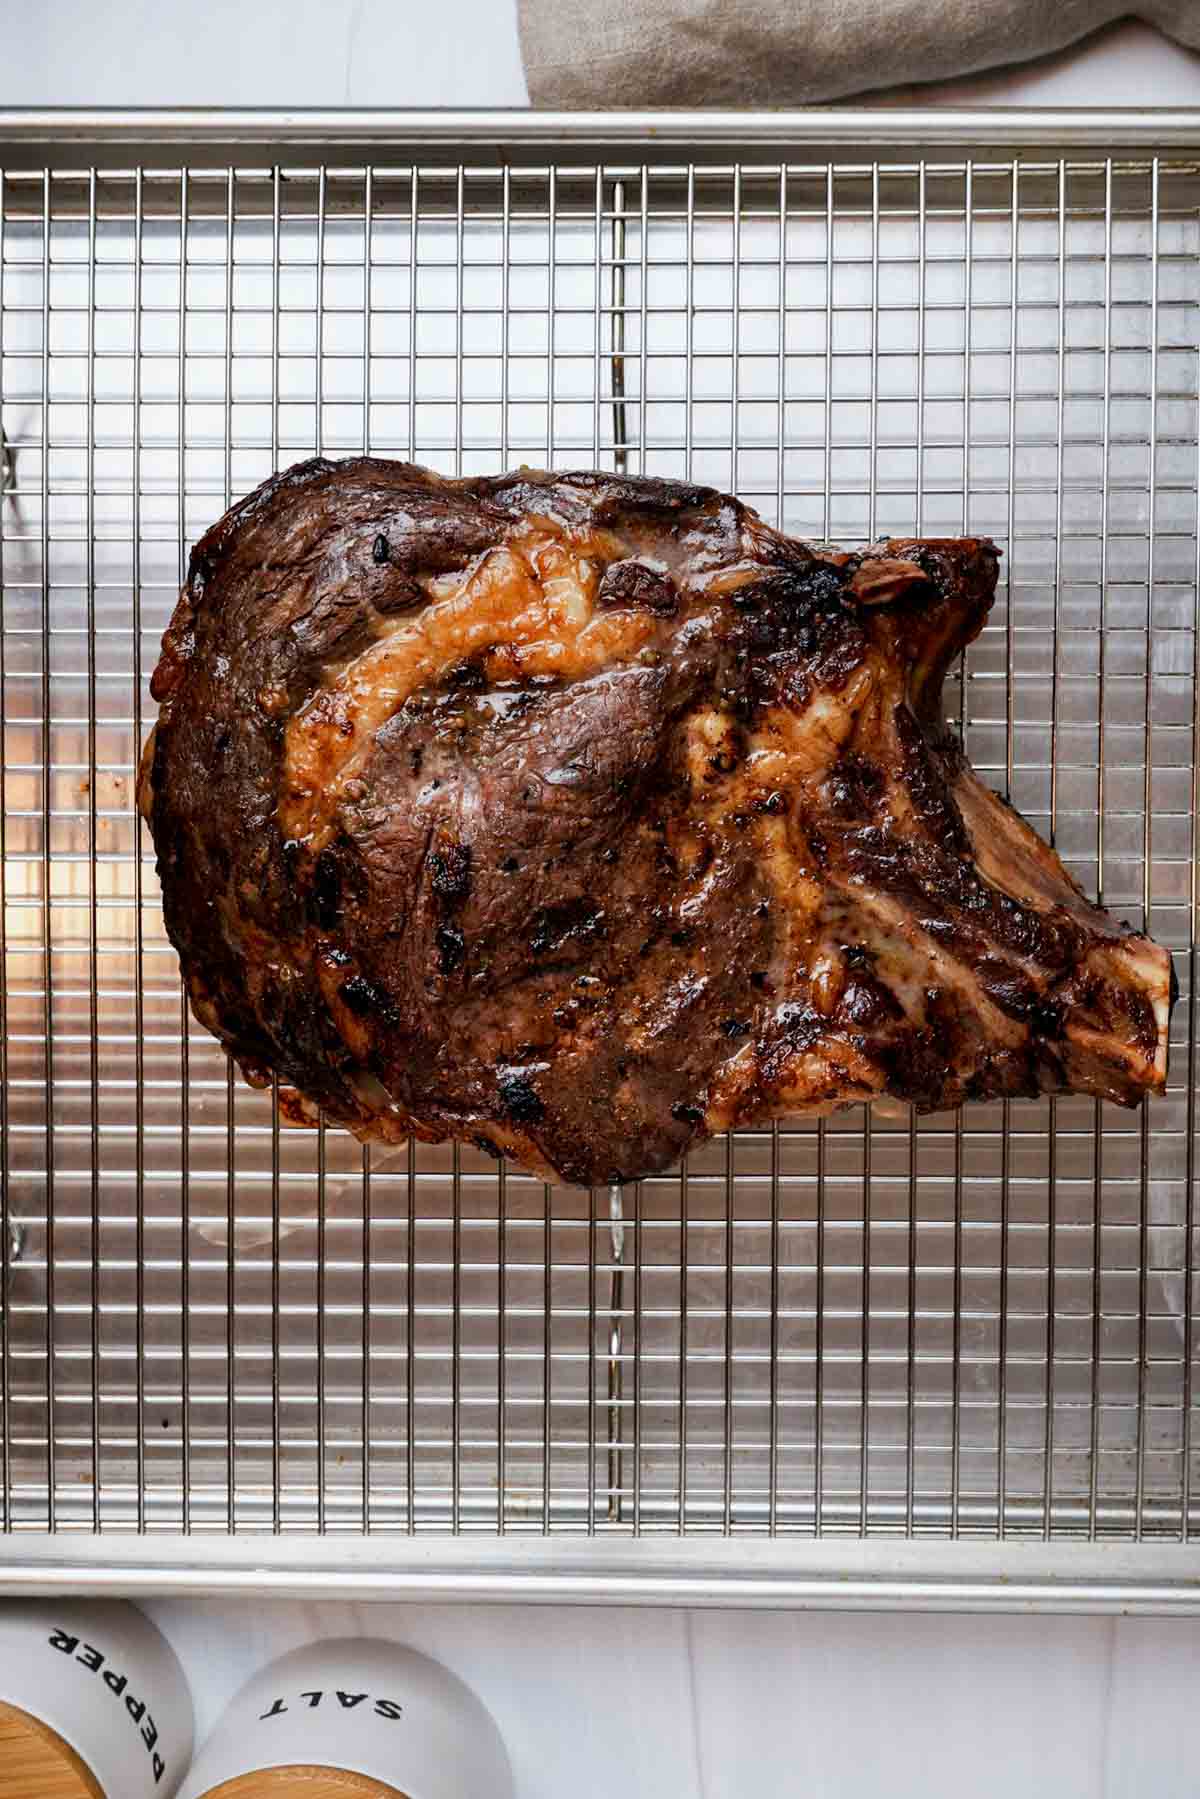 roasted prime rib on a baking rack